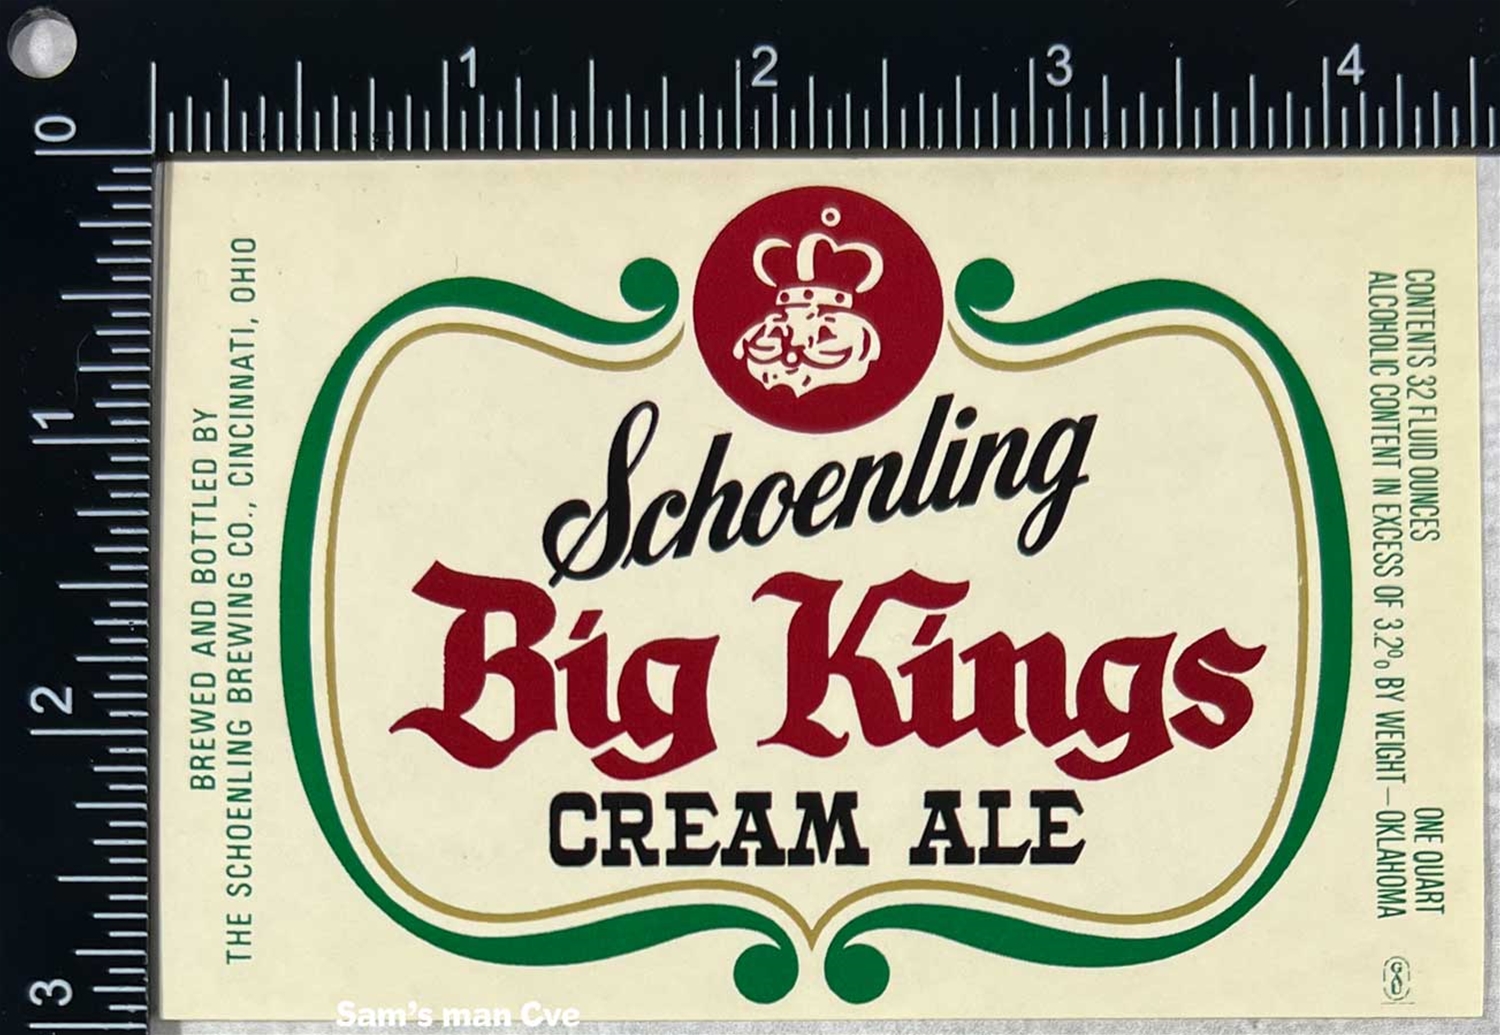 Schoenling Big Kings Cream Ale Label